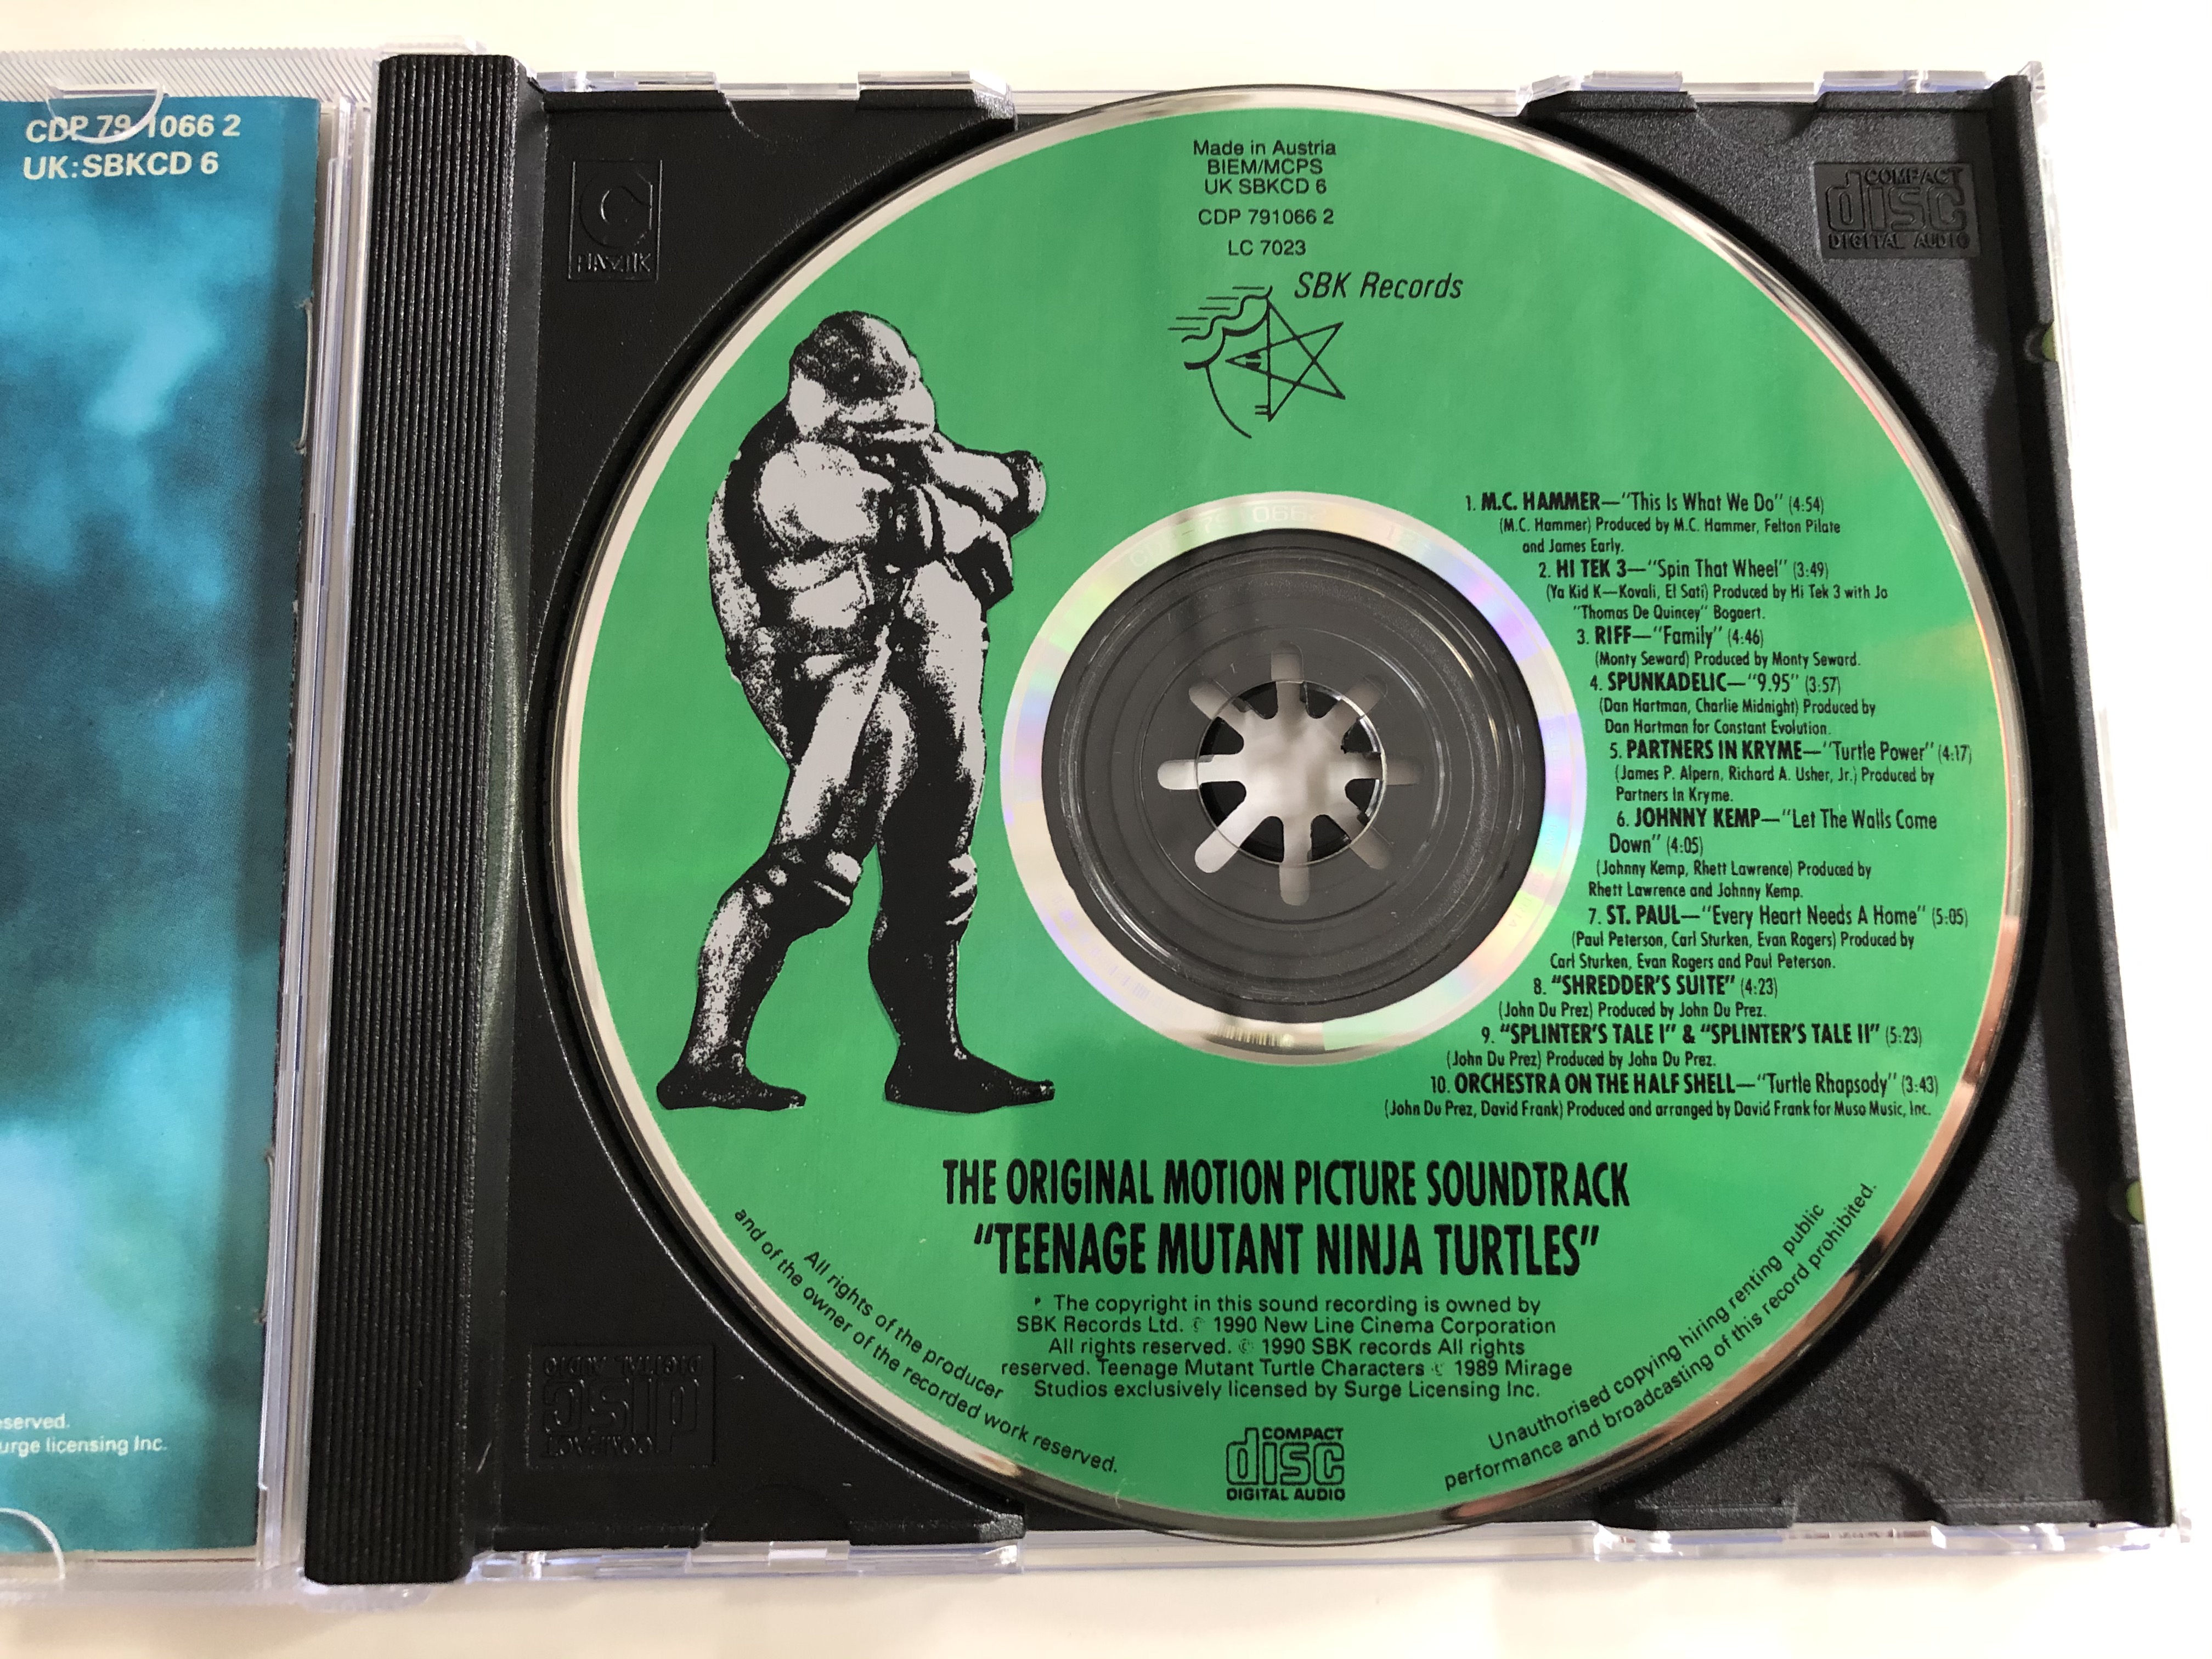 music-from-the-film-teenage-mutant-ninja-turtles-featuring-your-hero-turtles-michaelangelo-leonardo-raphael-donatello-sbk-records-audio-cd-1990-cdp-79-1066-2-5-.jpg